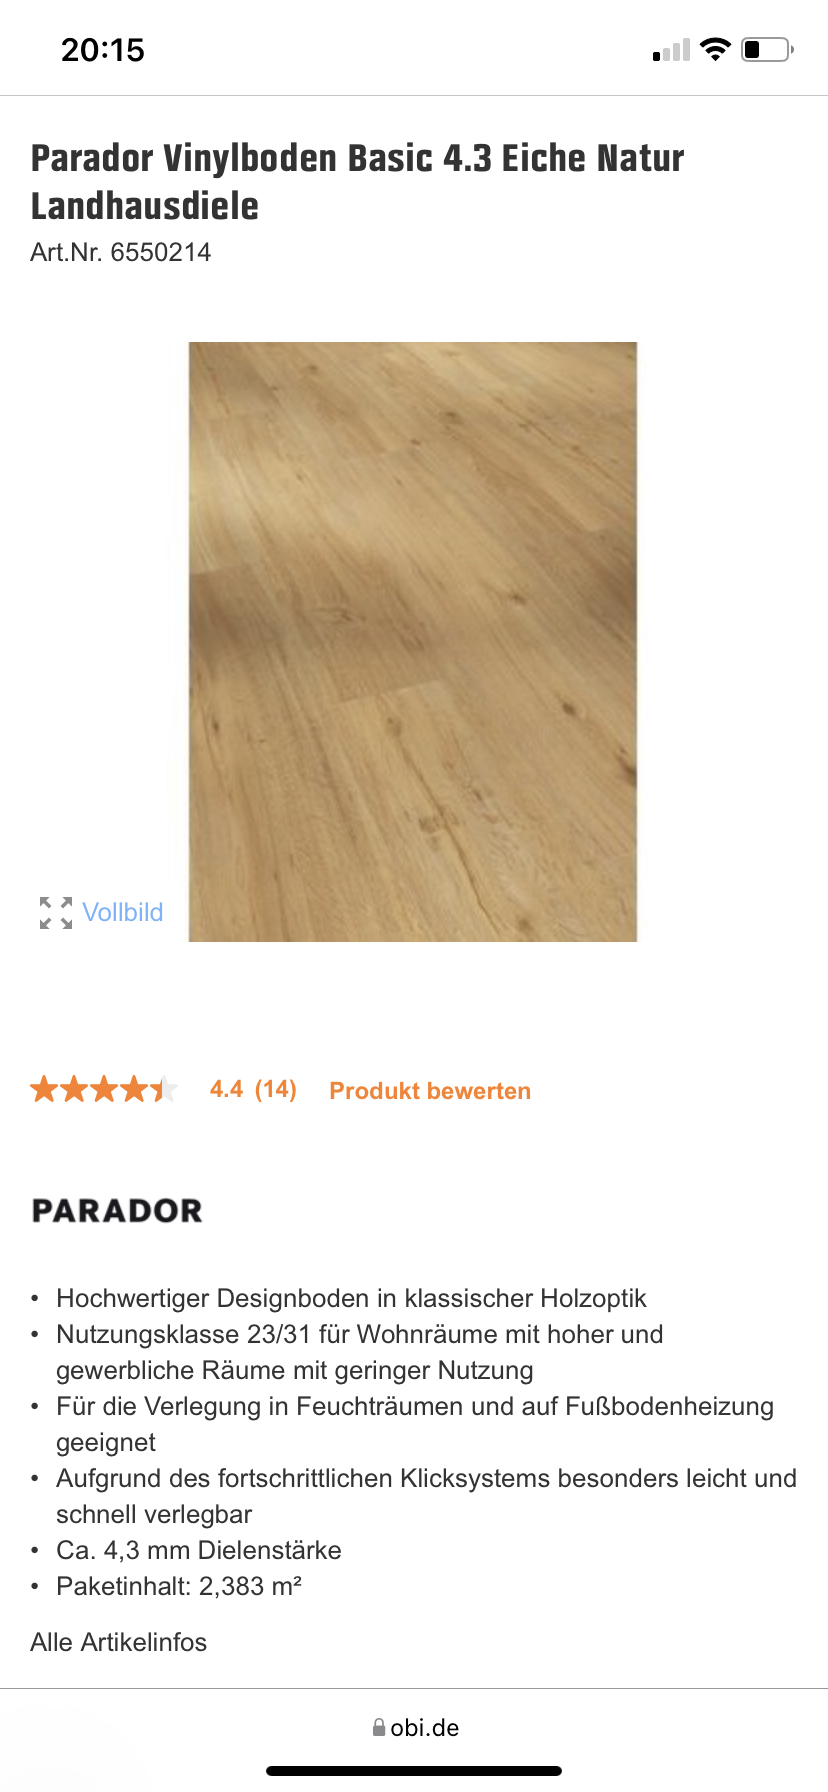 Parador Vinylboden Basic 4.3 Eiche Natur Landhausdiele